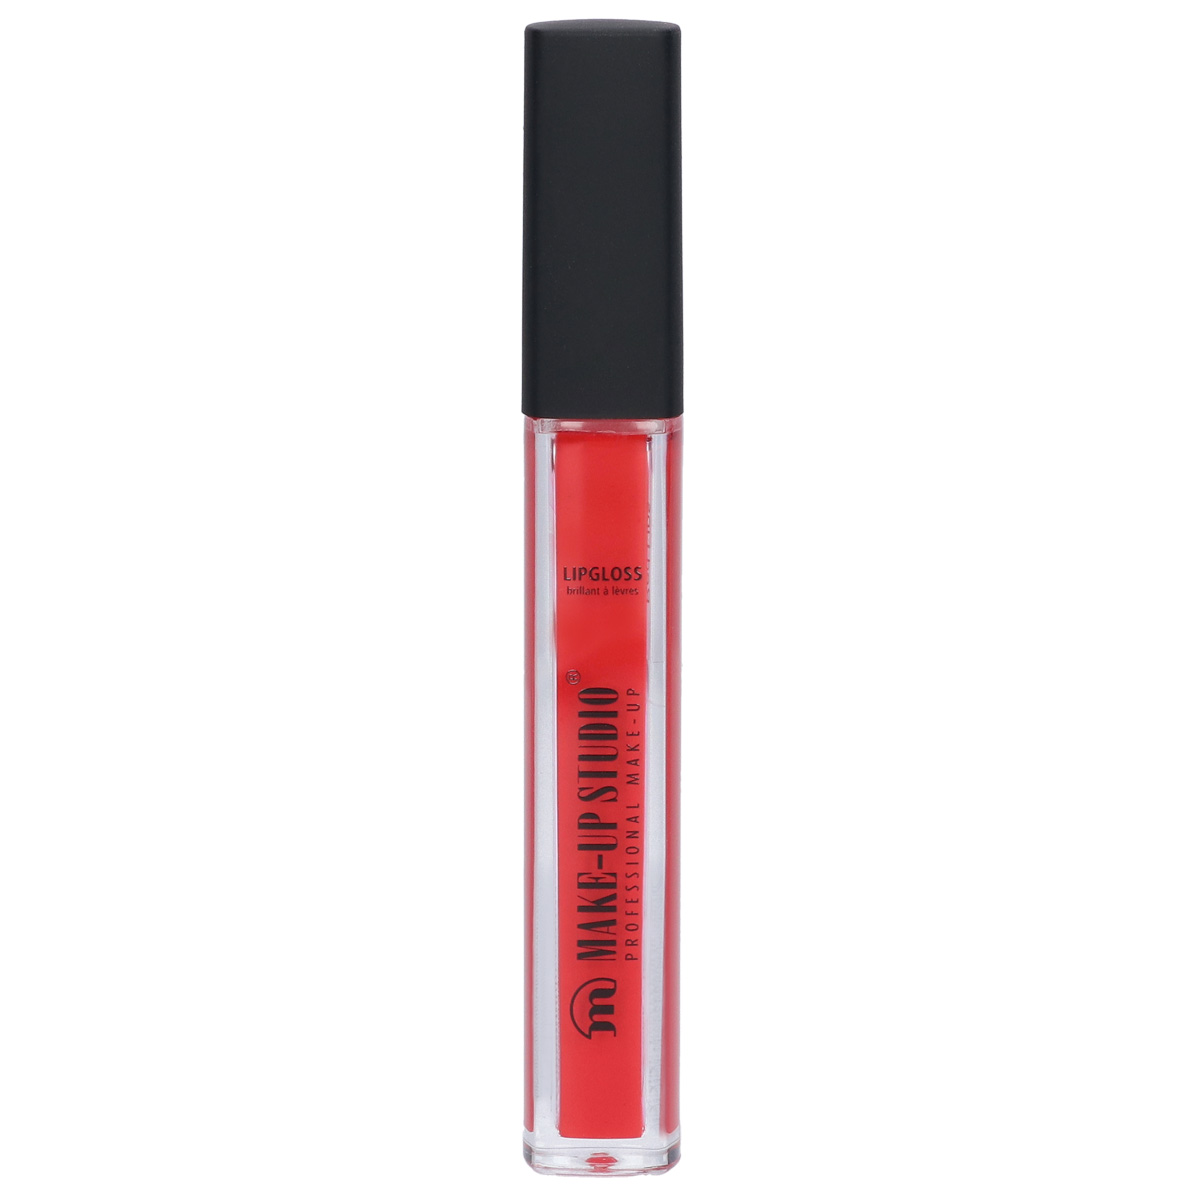 Make-up Studio Lip Gloss Paint - Red lips